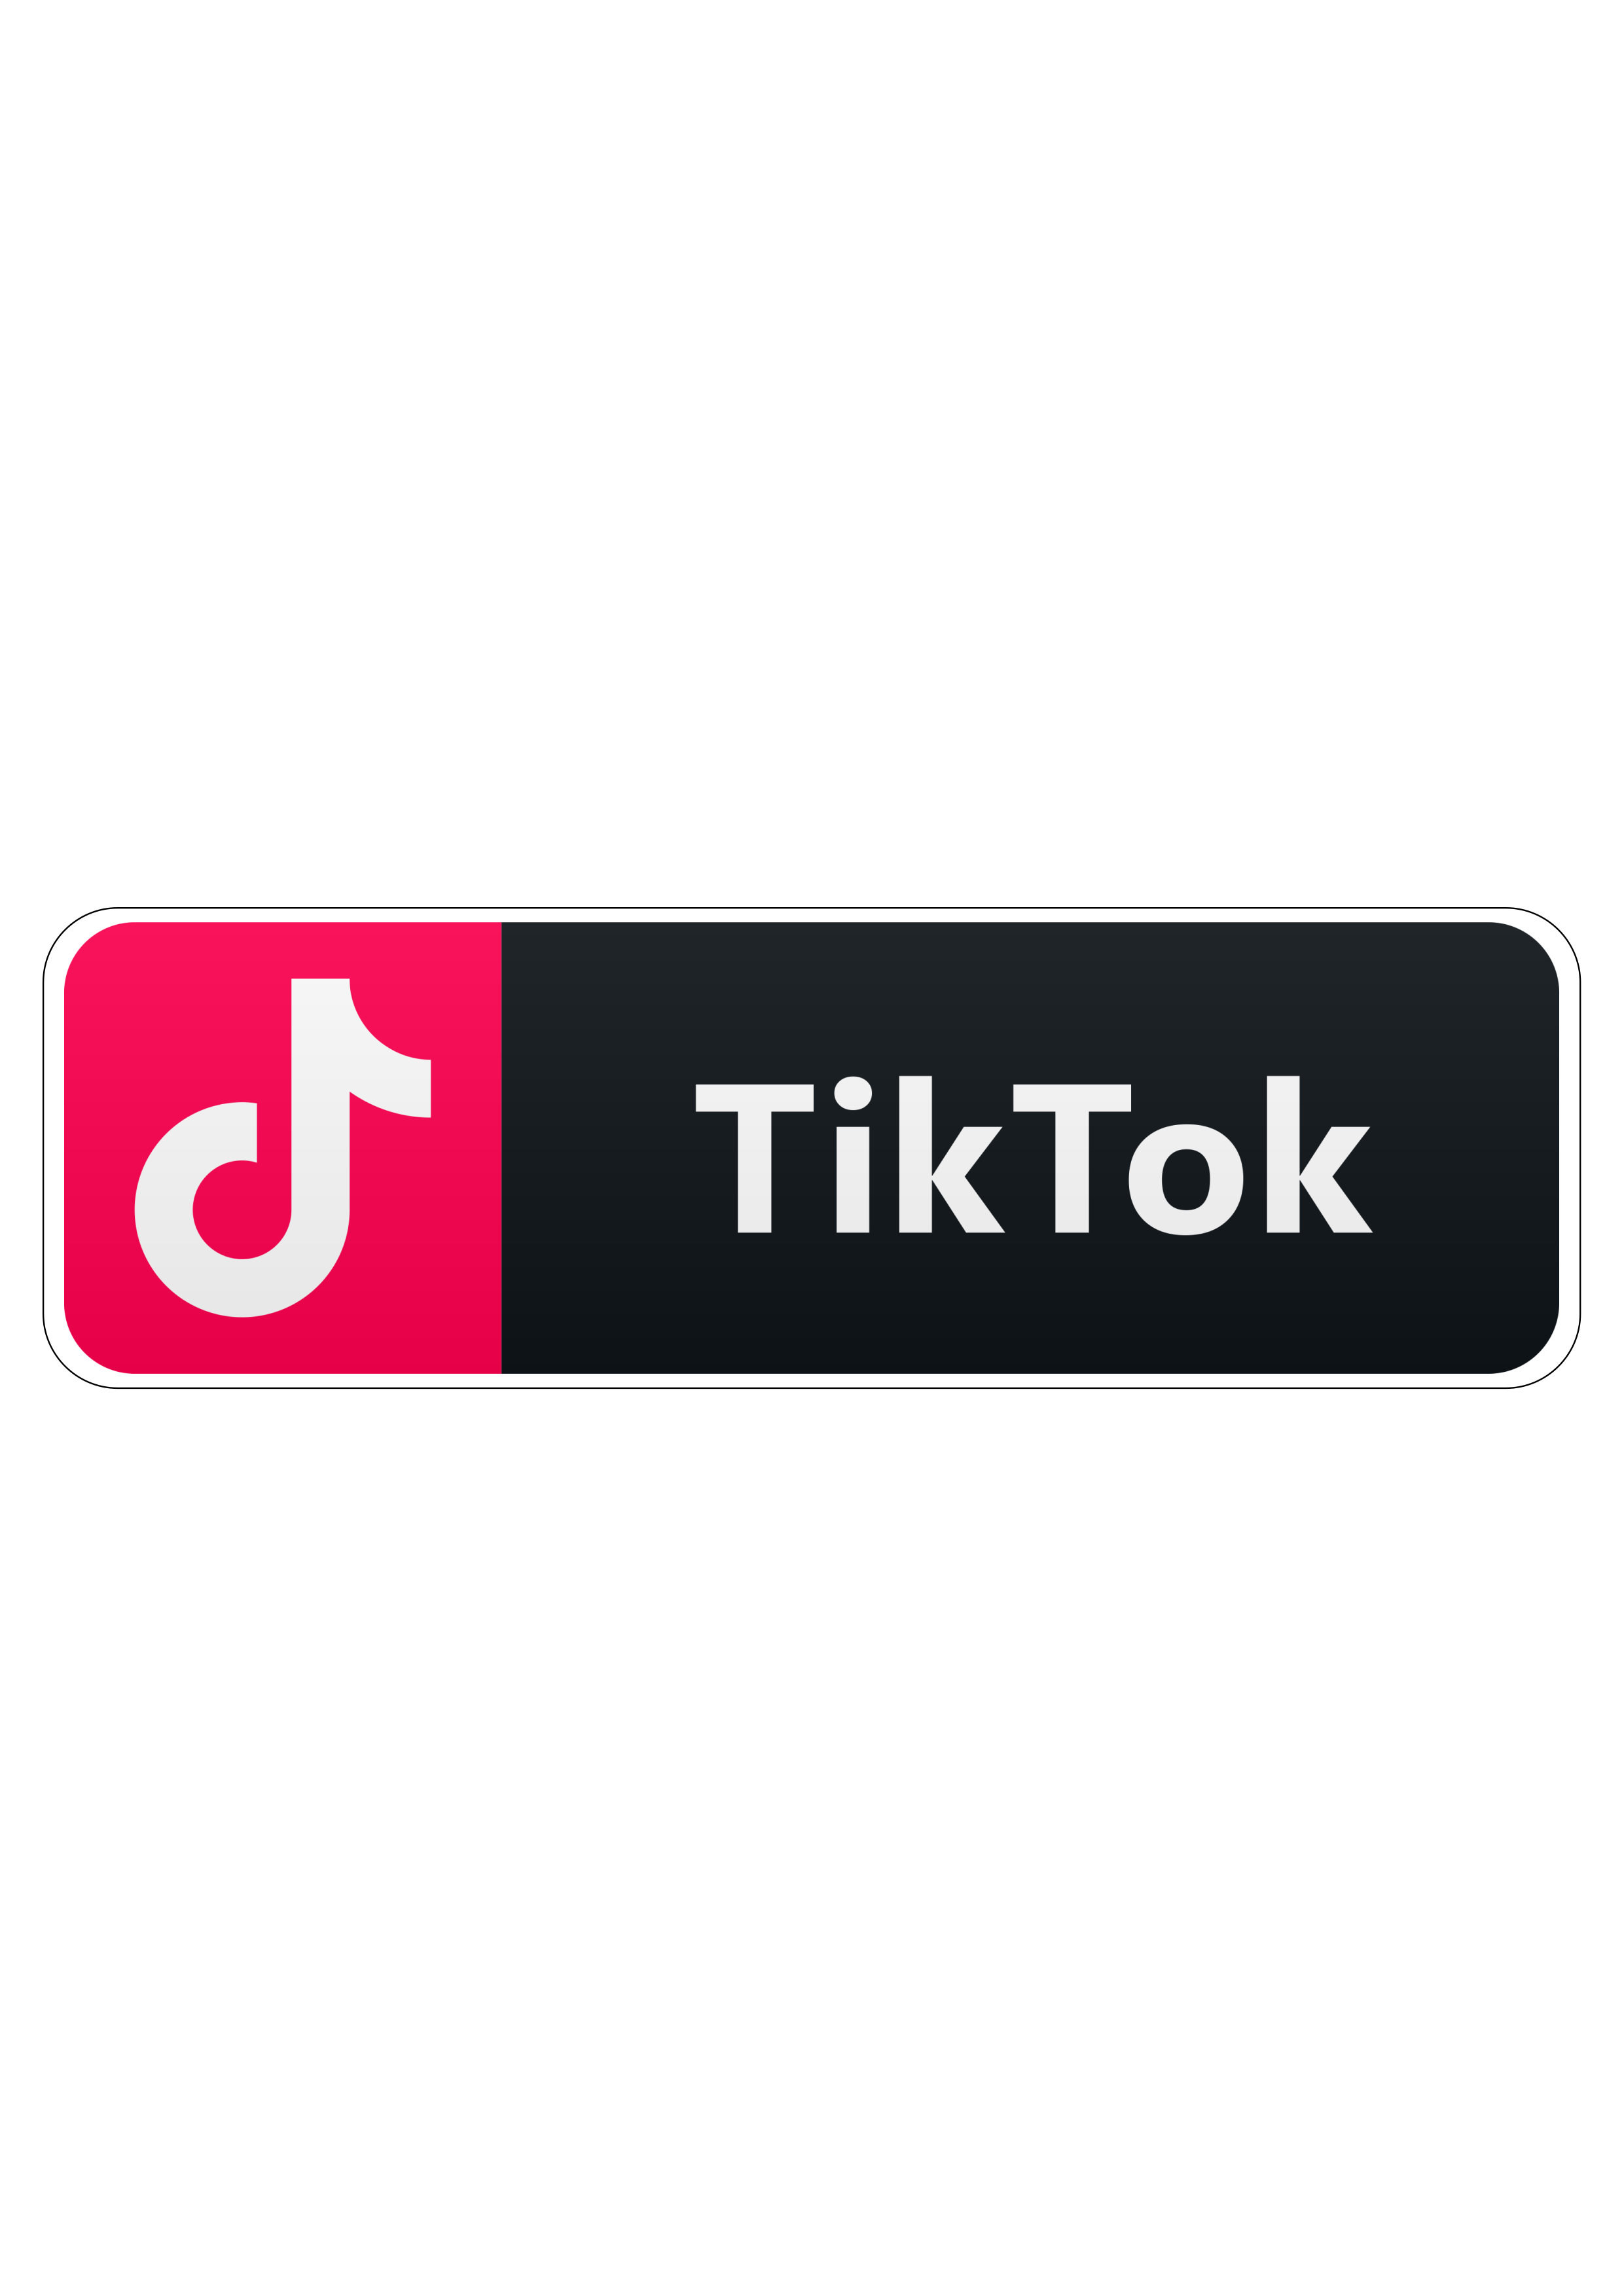 Tiktok simbolo logo aplicativo recorte contorno painel designer gráfico app de vídeos banner png